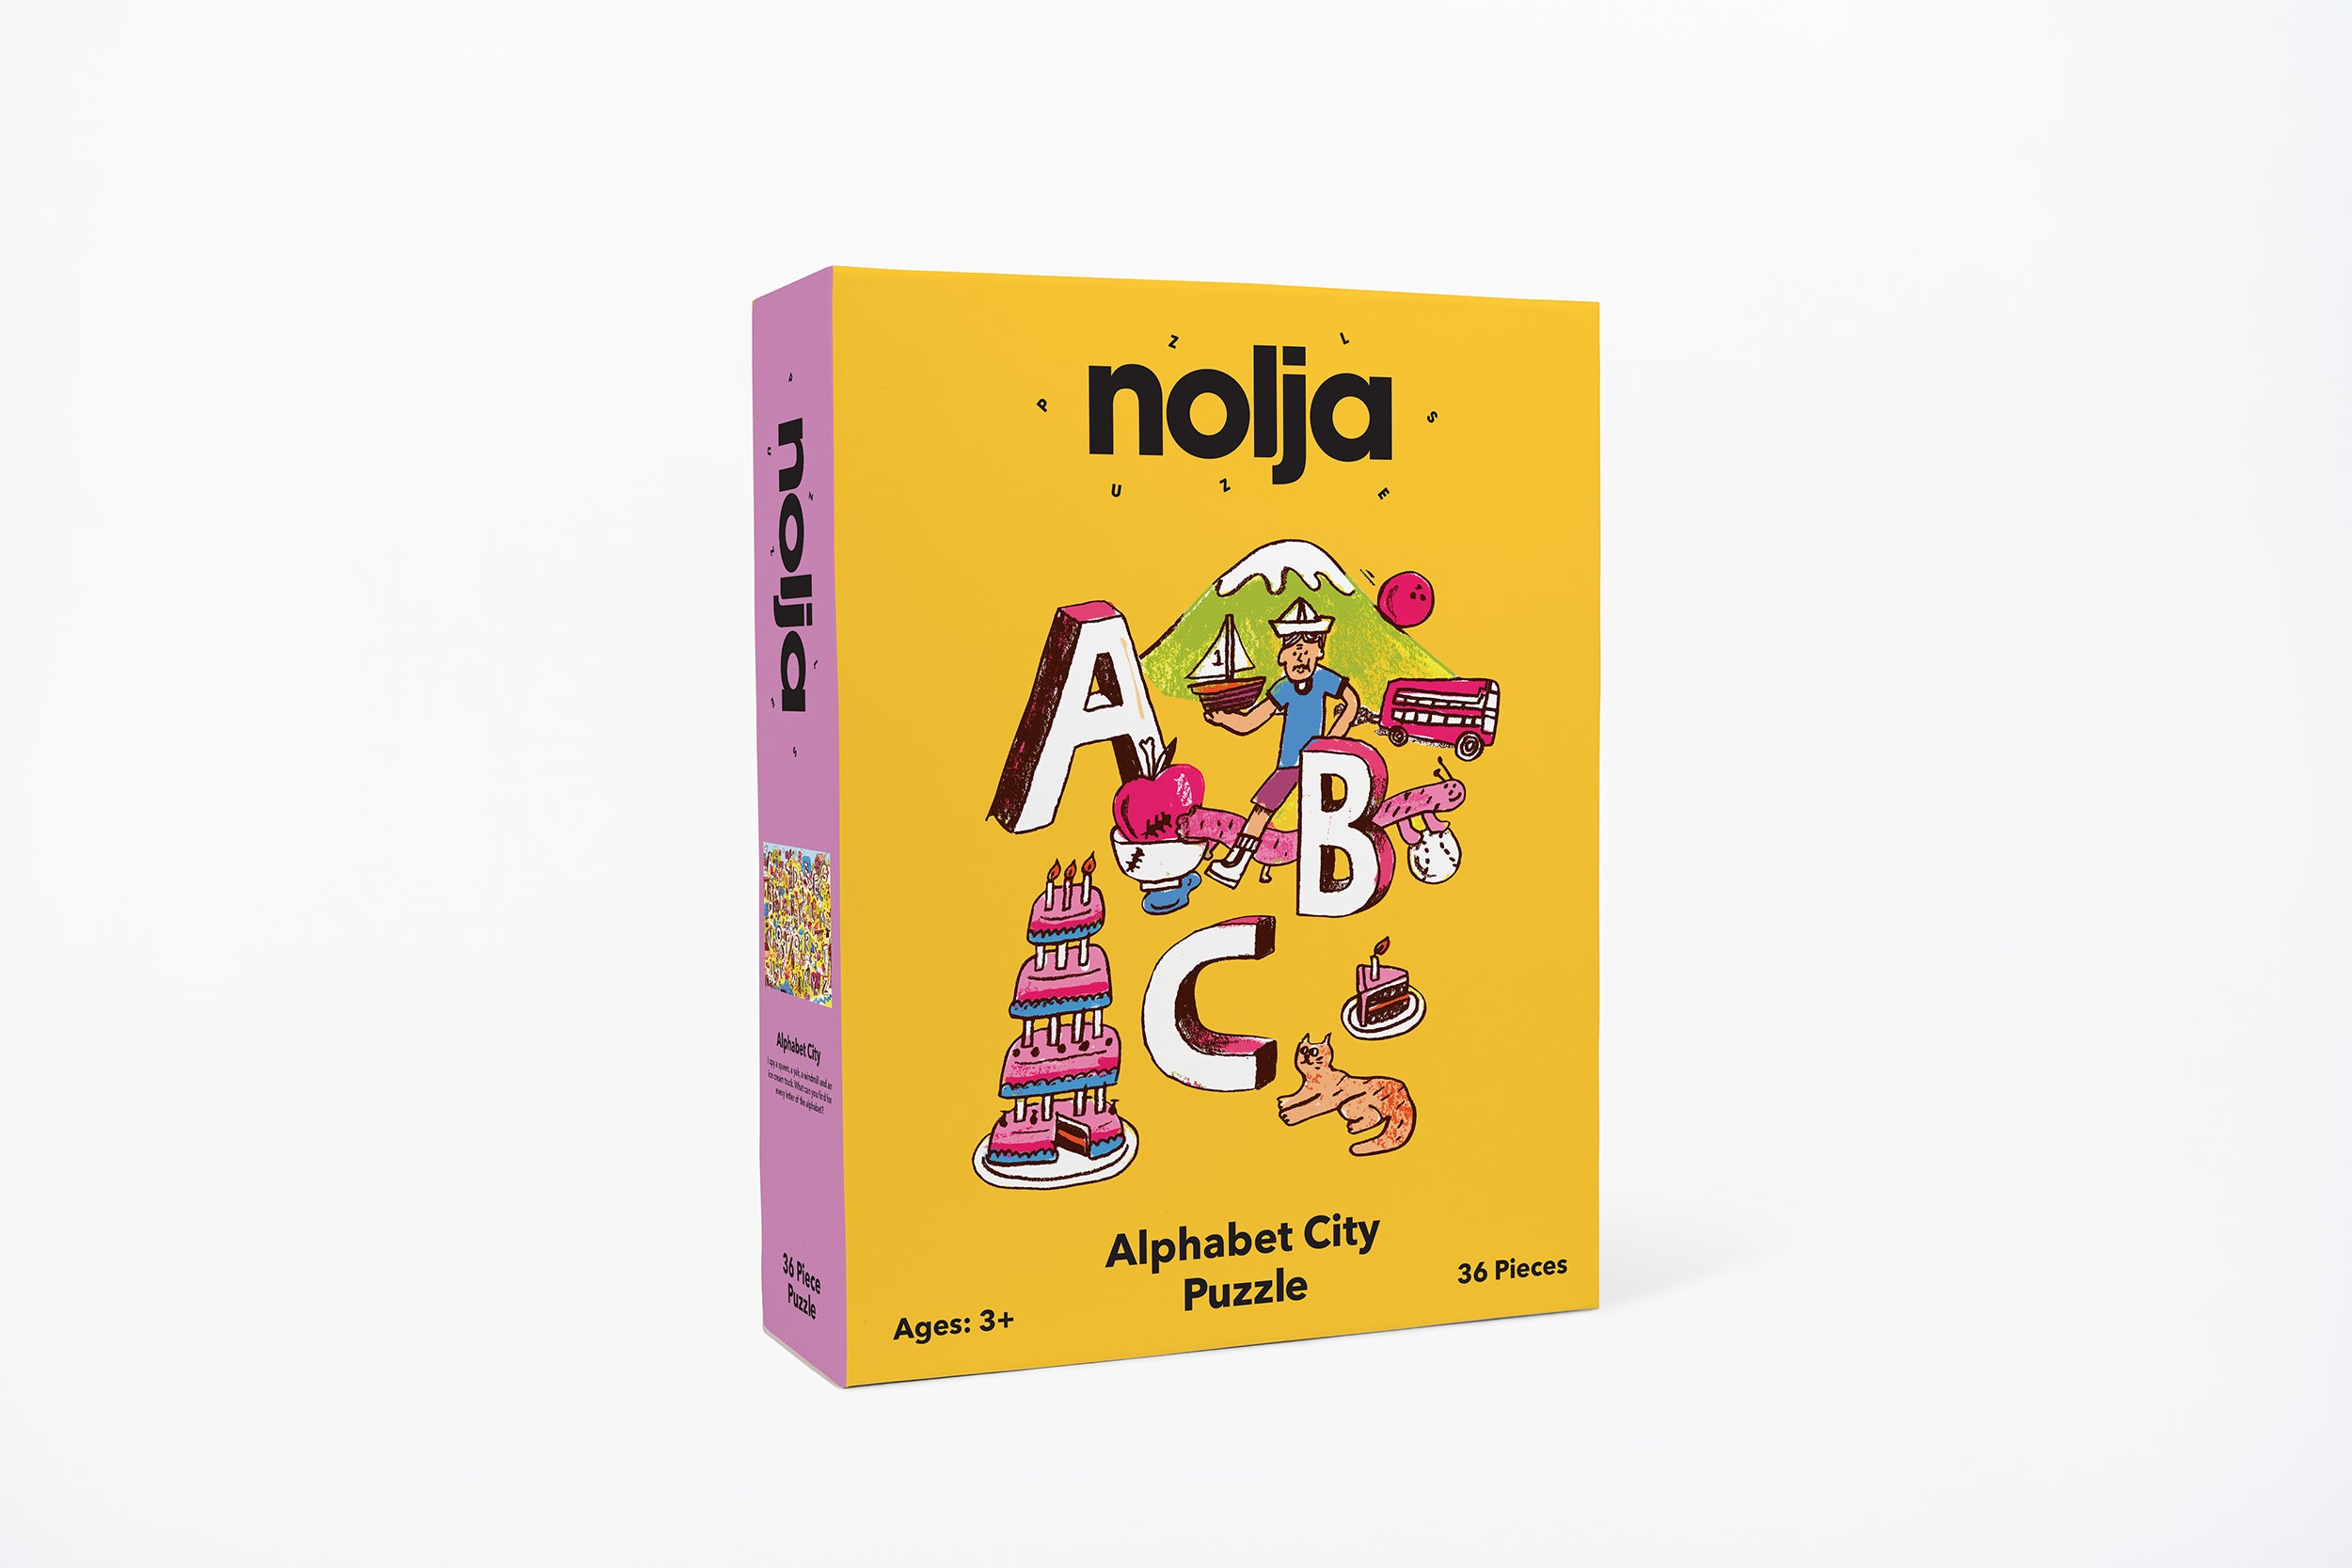 Alphabet City Puzzle